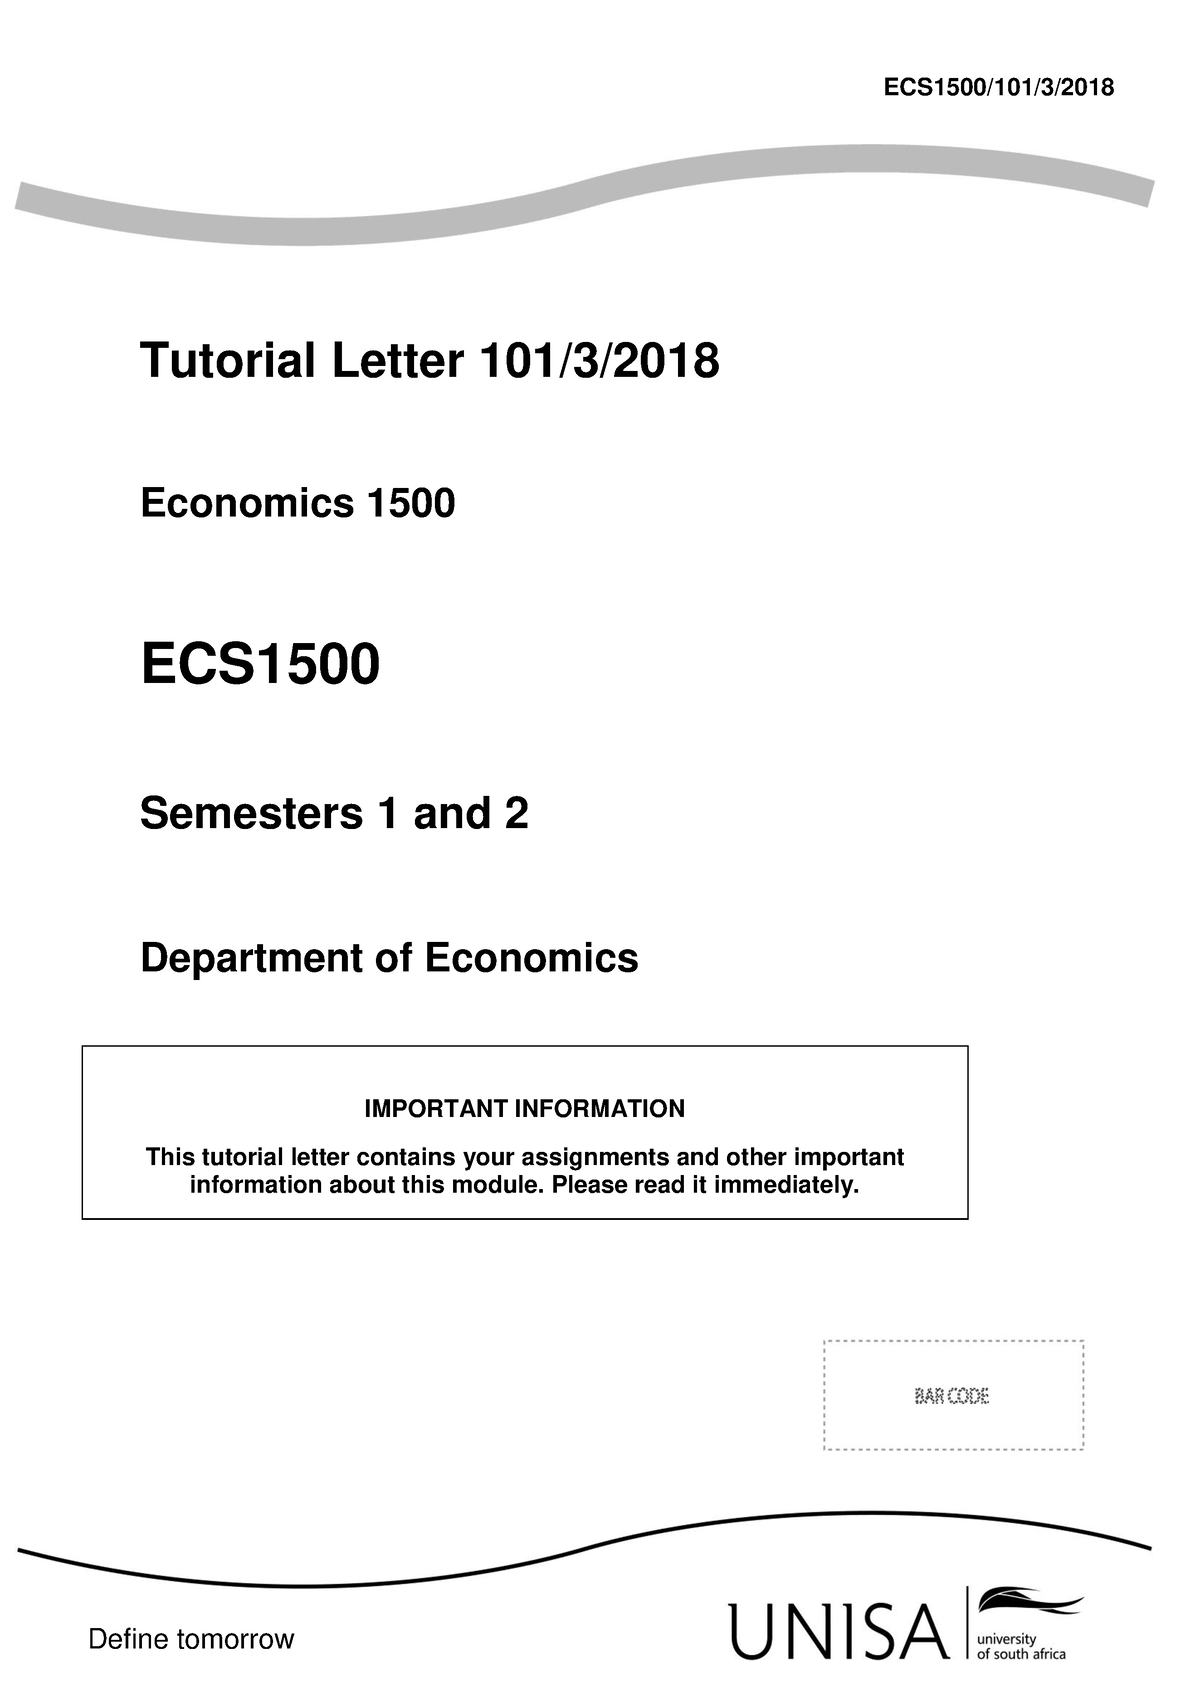 ecs1500 assignment 5 semester 2